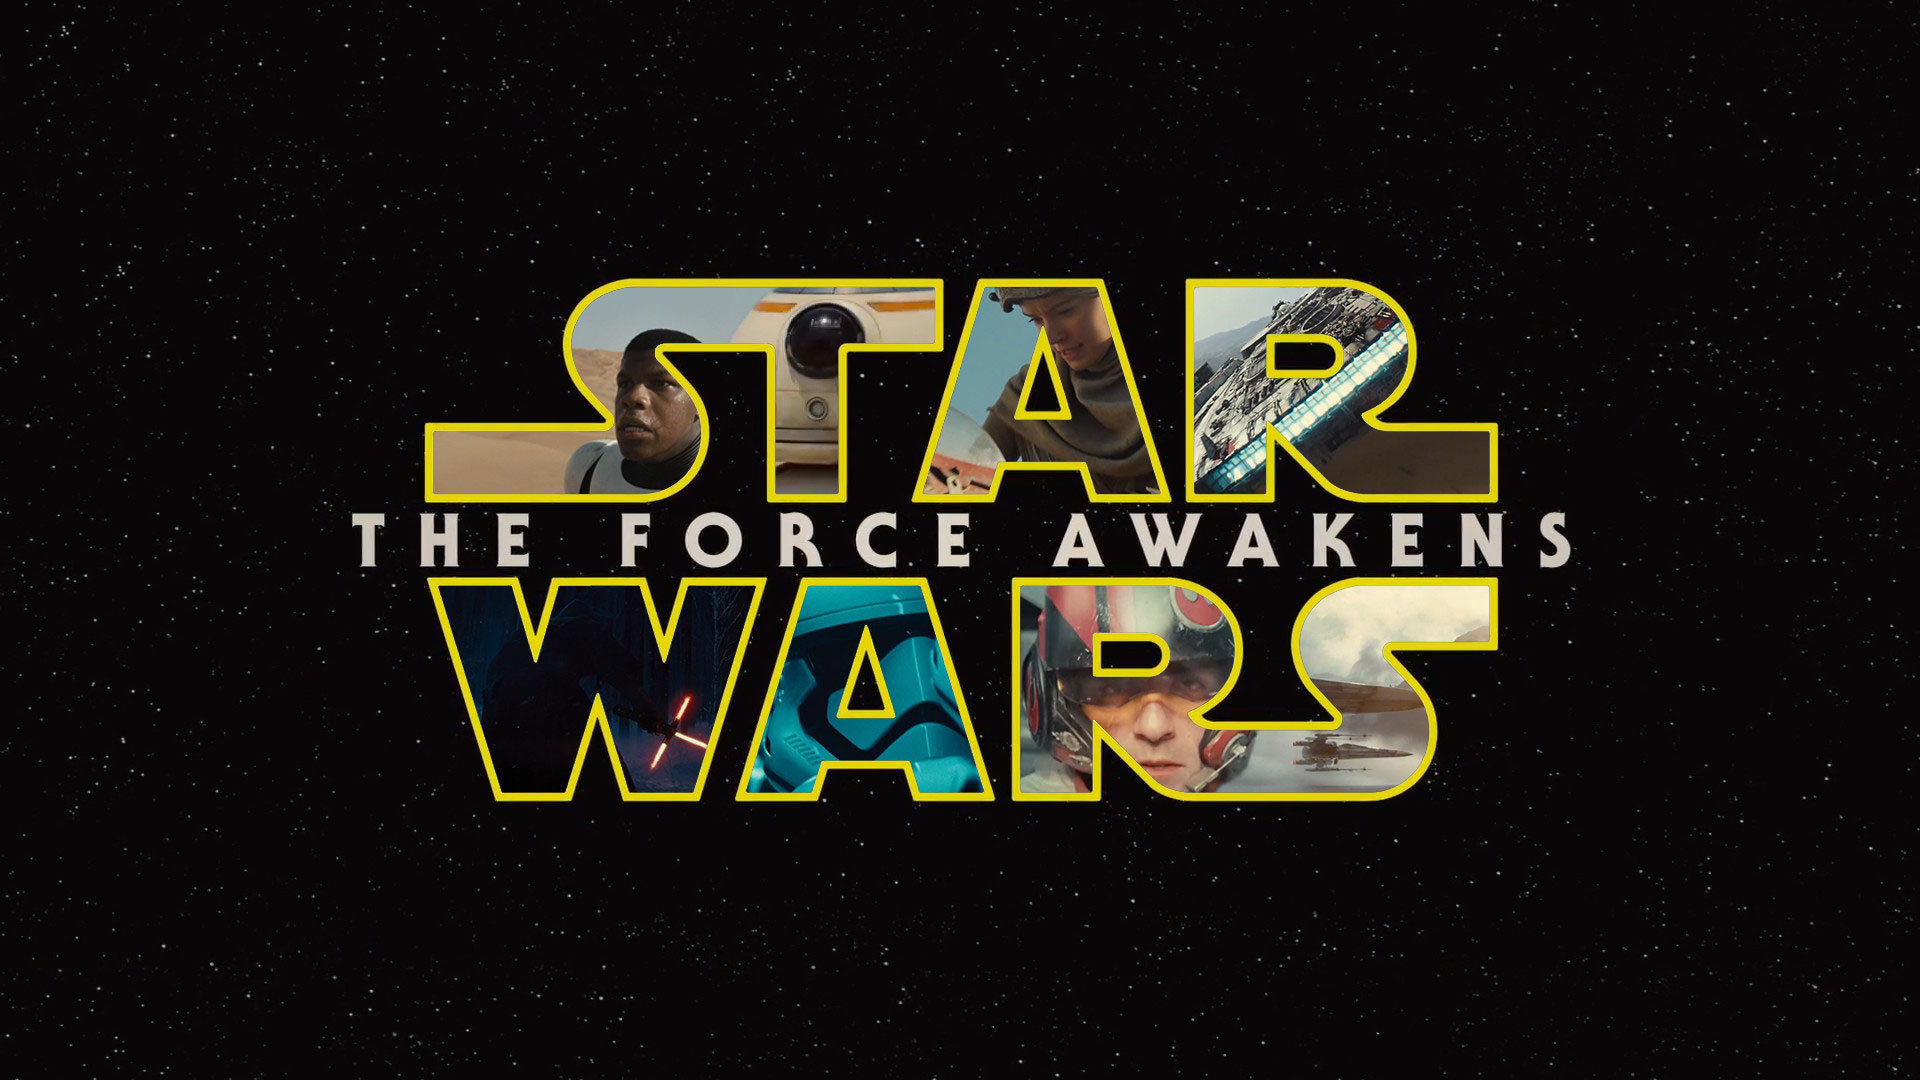 Best Star Wars Episode 7 (VII): The Force Awakens wallpaper ID:282801 for High Resolution 1080p desktop